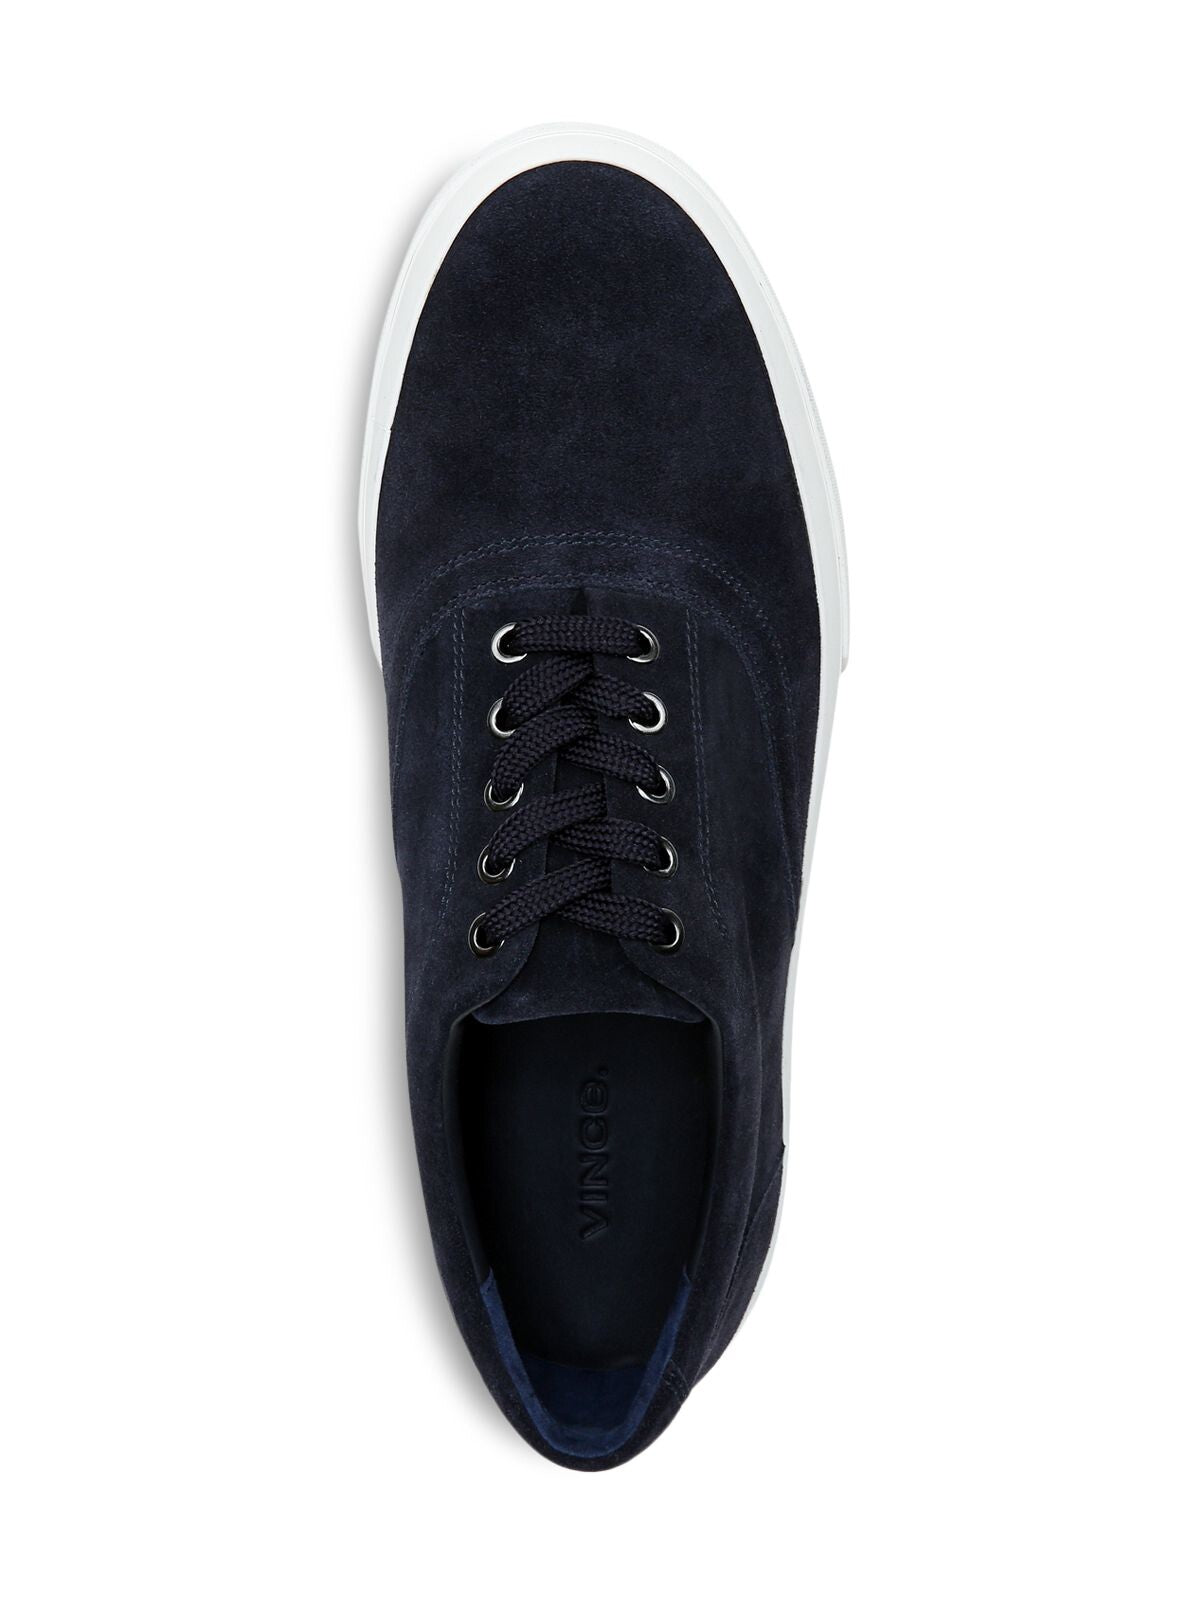 VINCE. Mens Navy Comfort Fullington Round Toe Platform Lace-Up Leather Sneakers Shoes 12 M